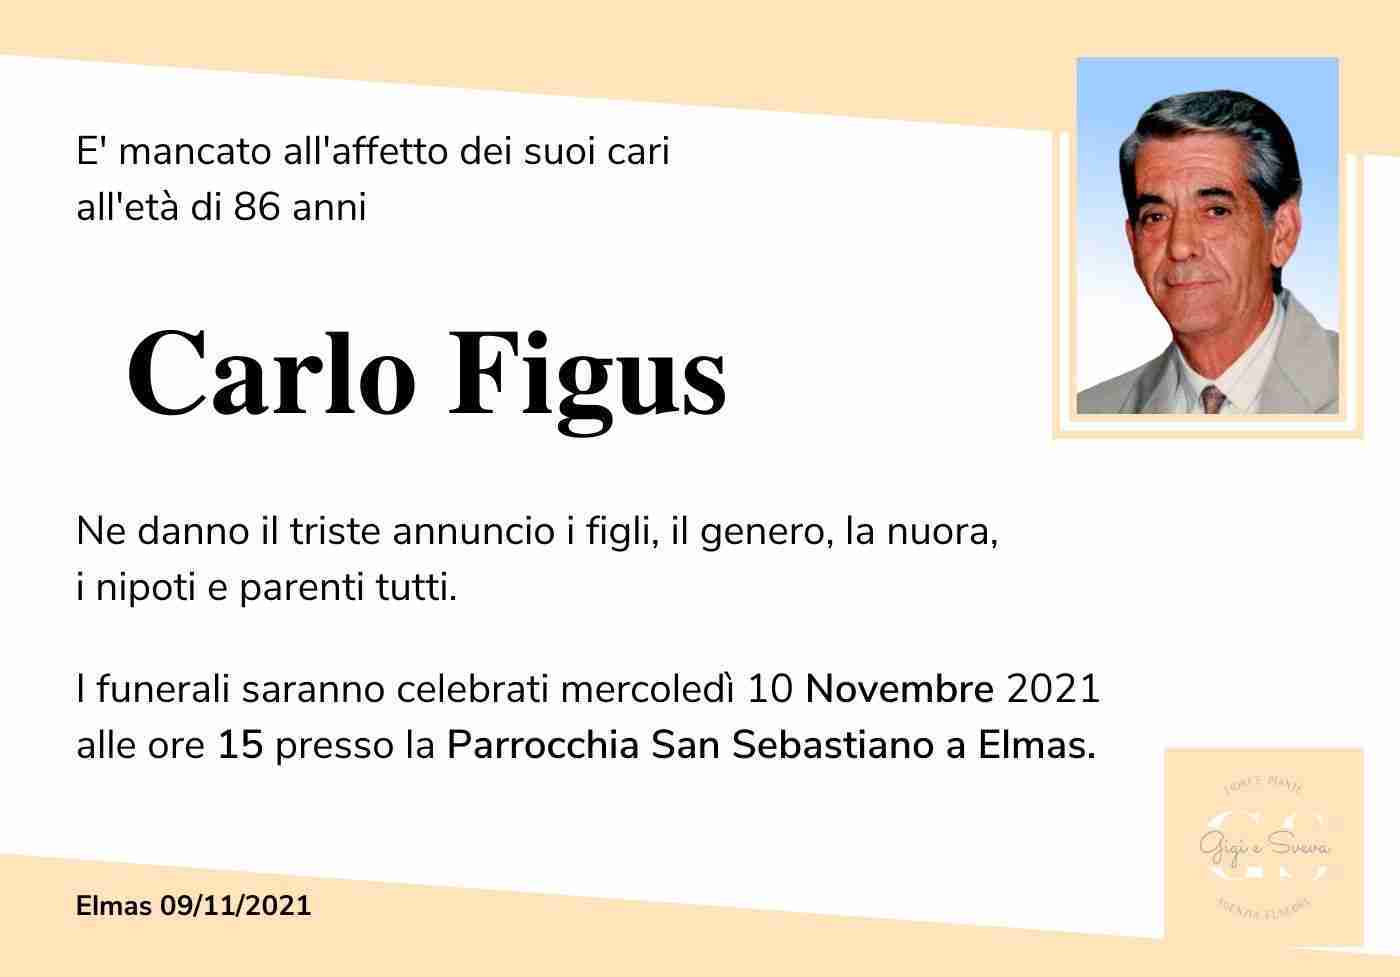 Carlo Figus